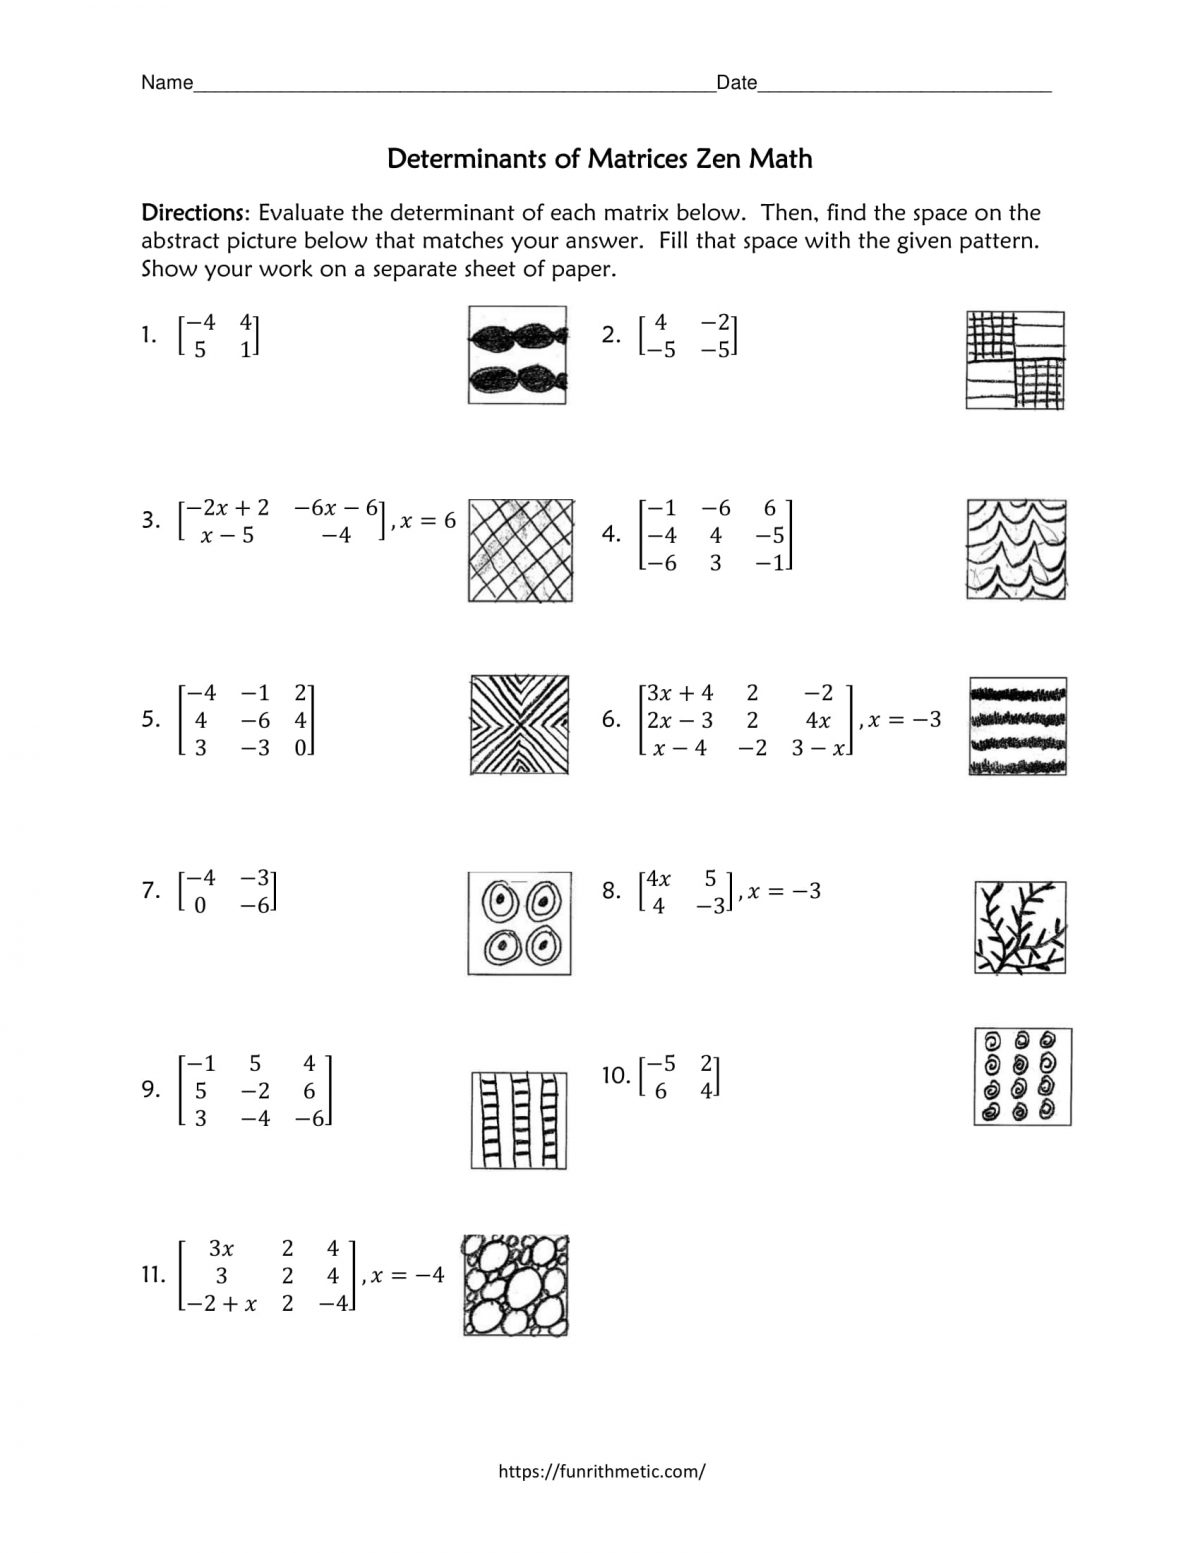 determinants of matrices zen math